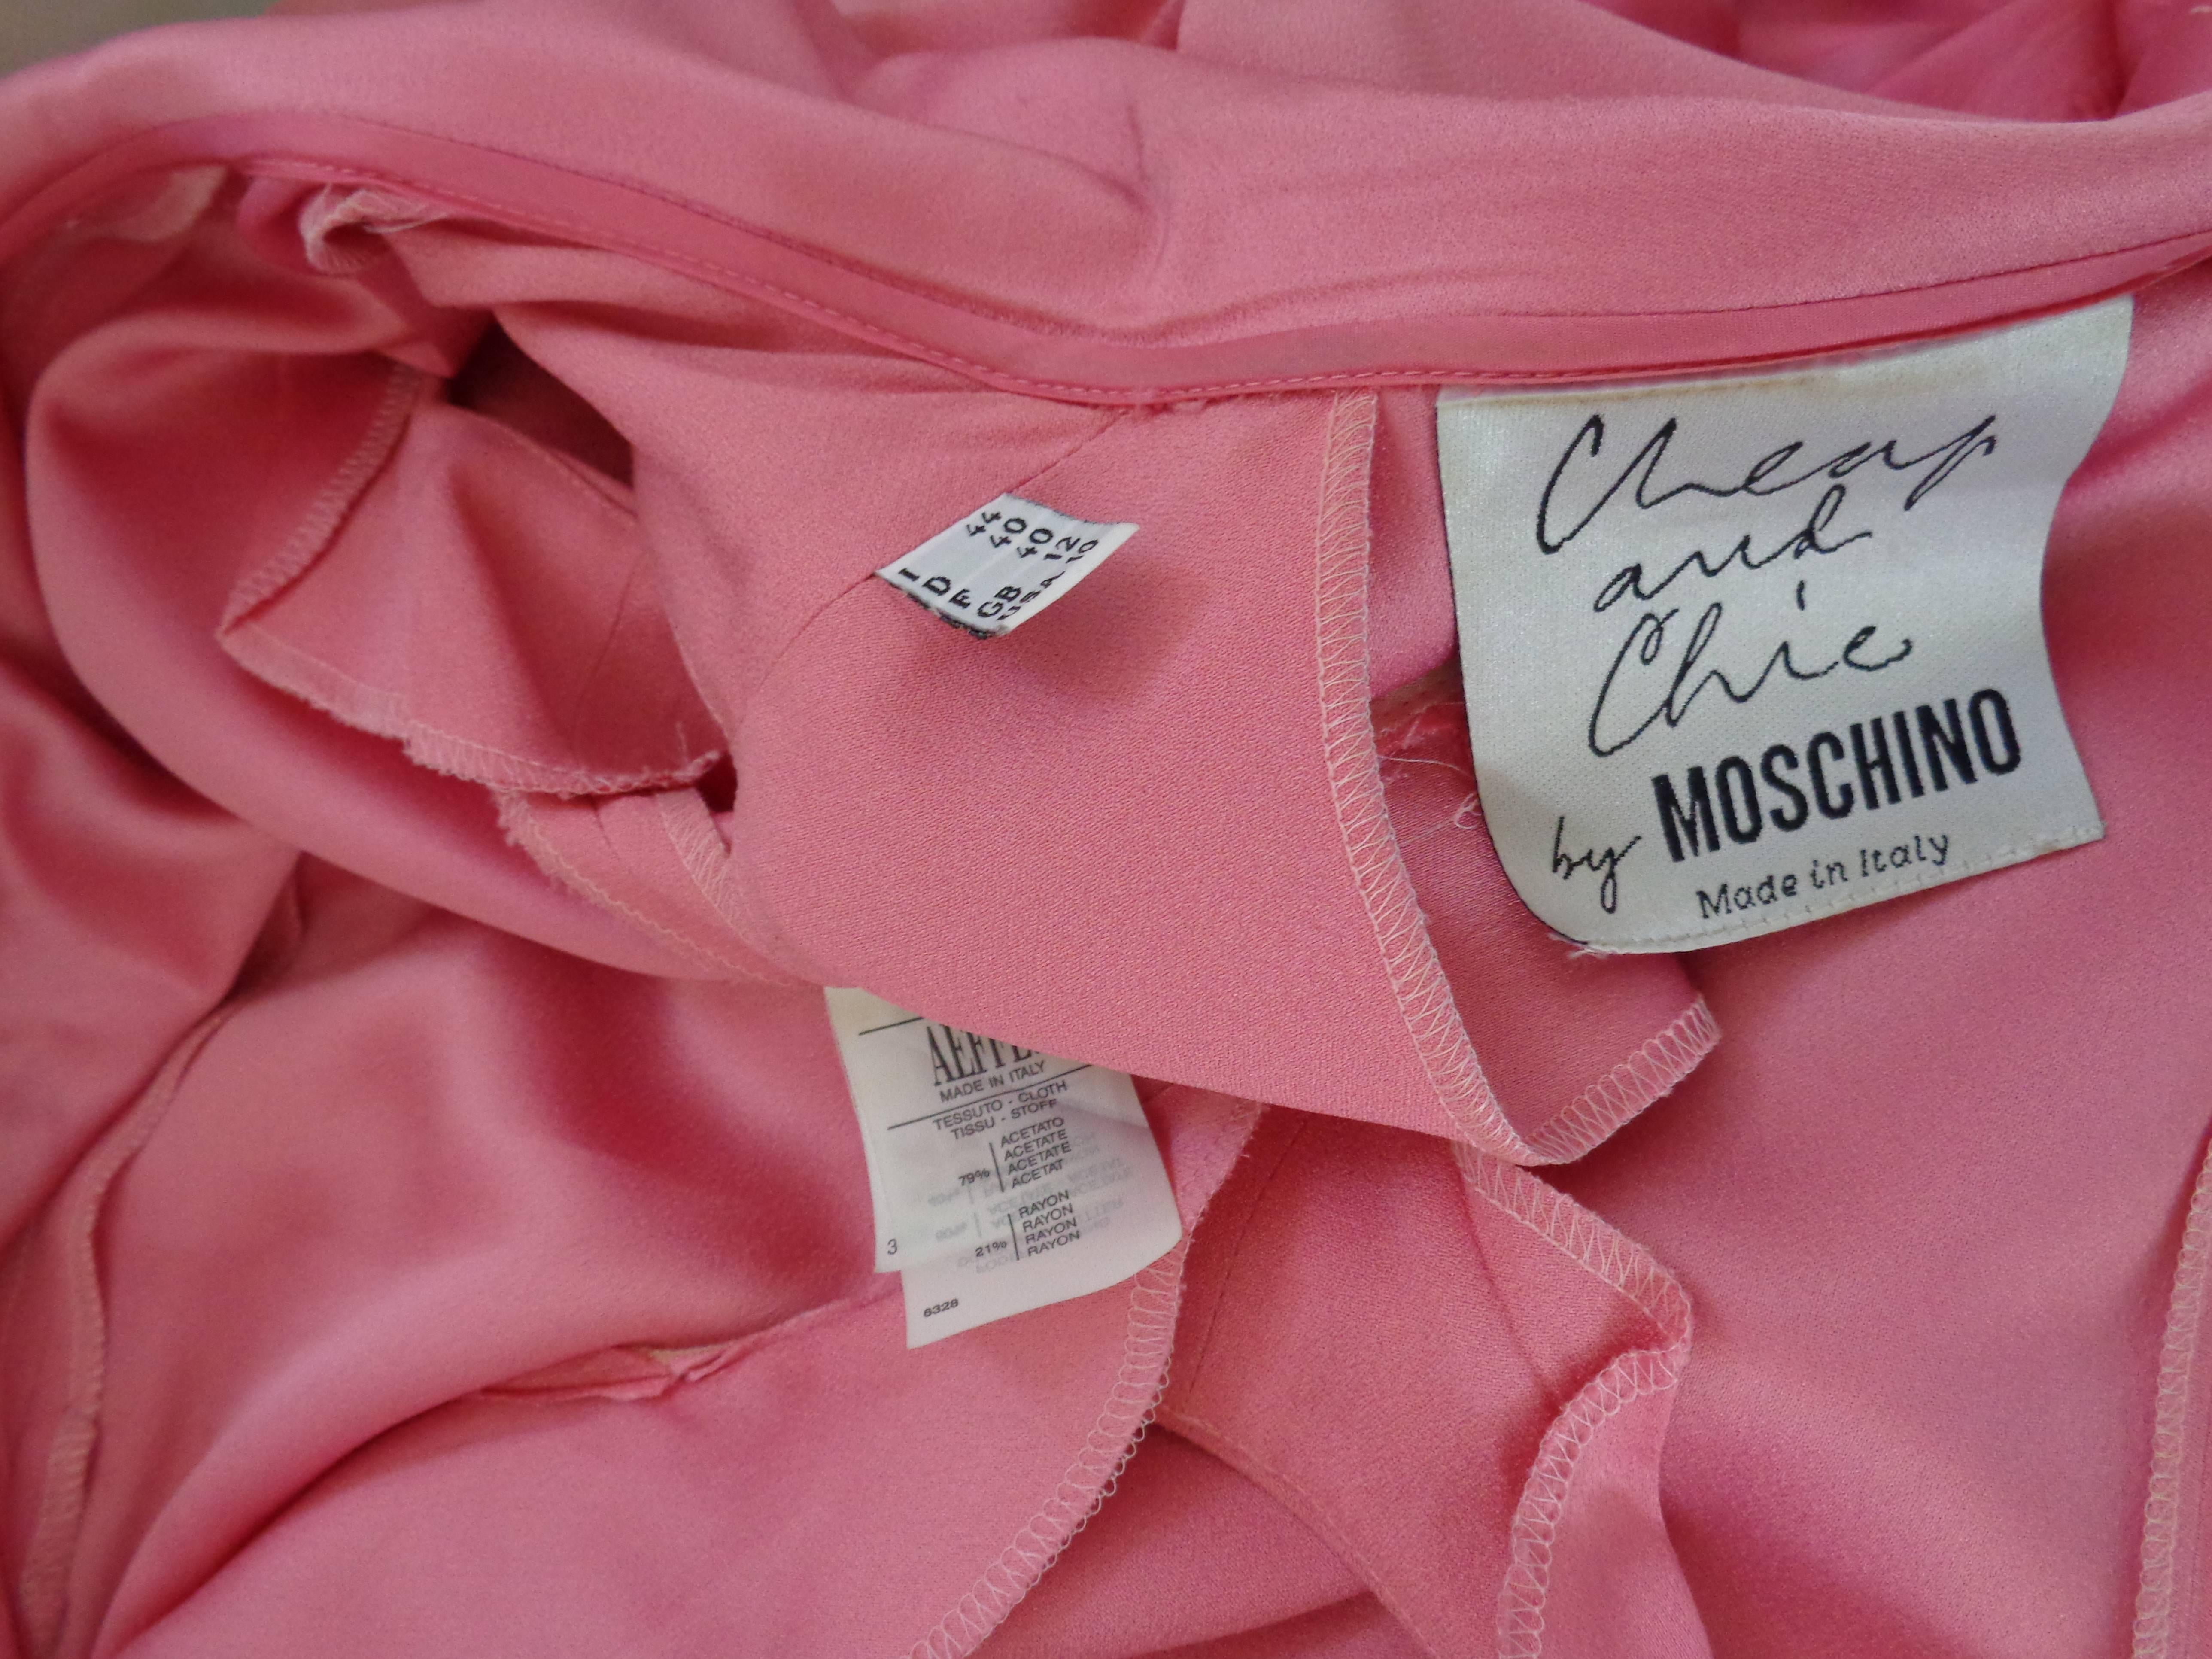 Moschino Cheap & Chic Pink Dress 1